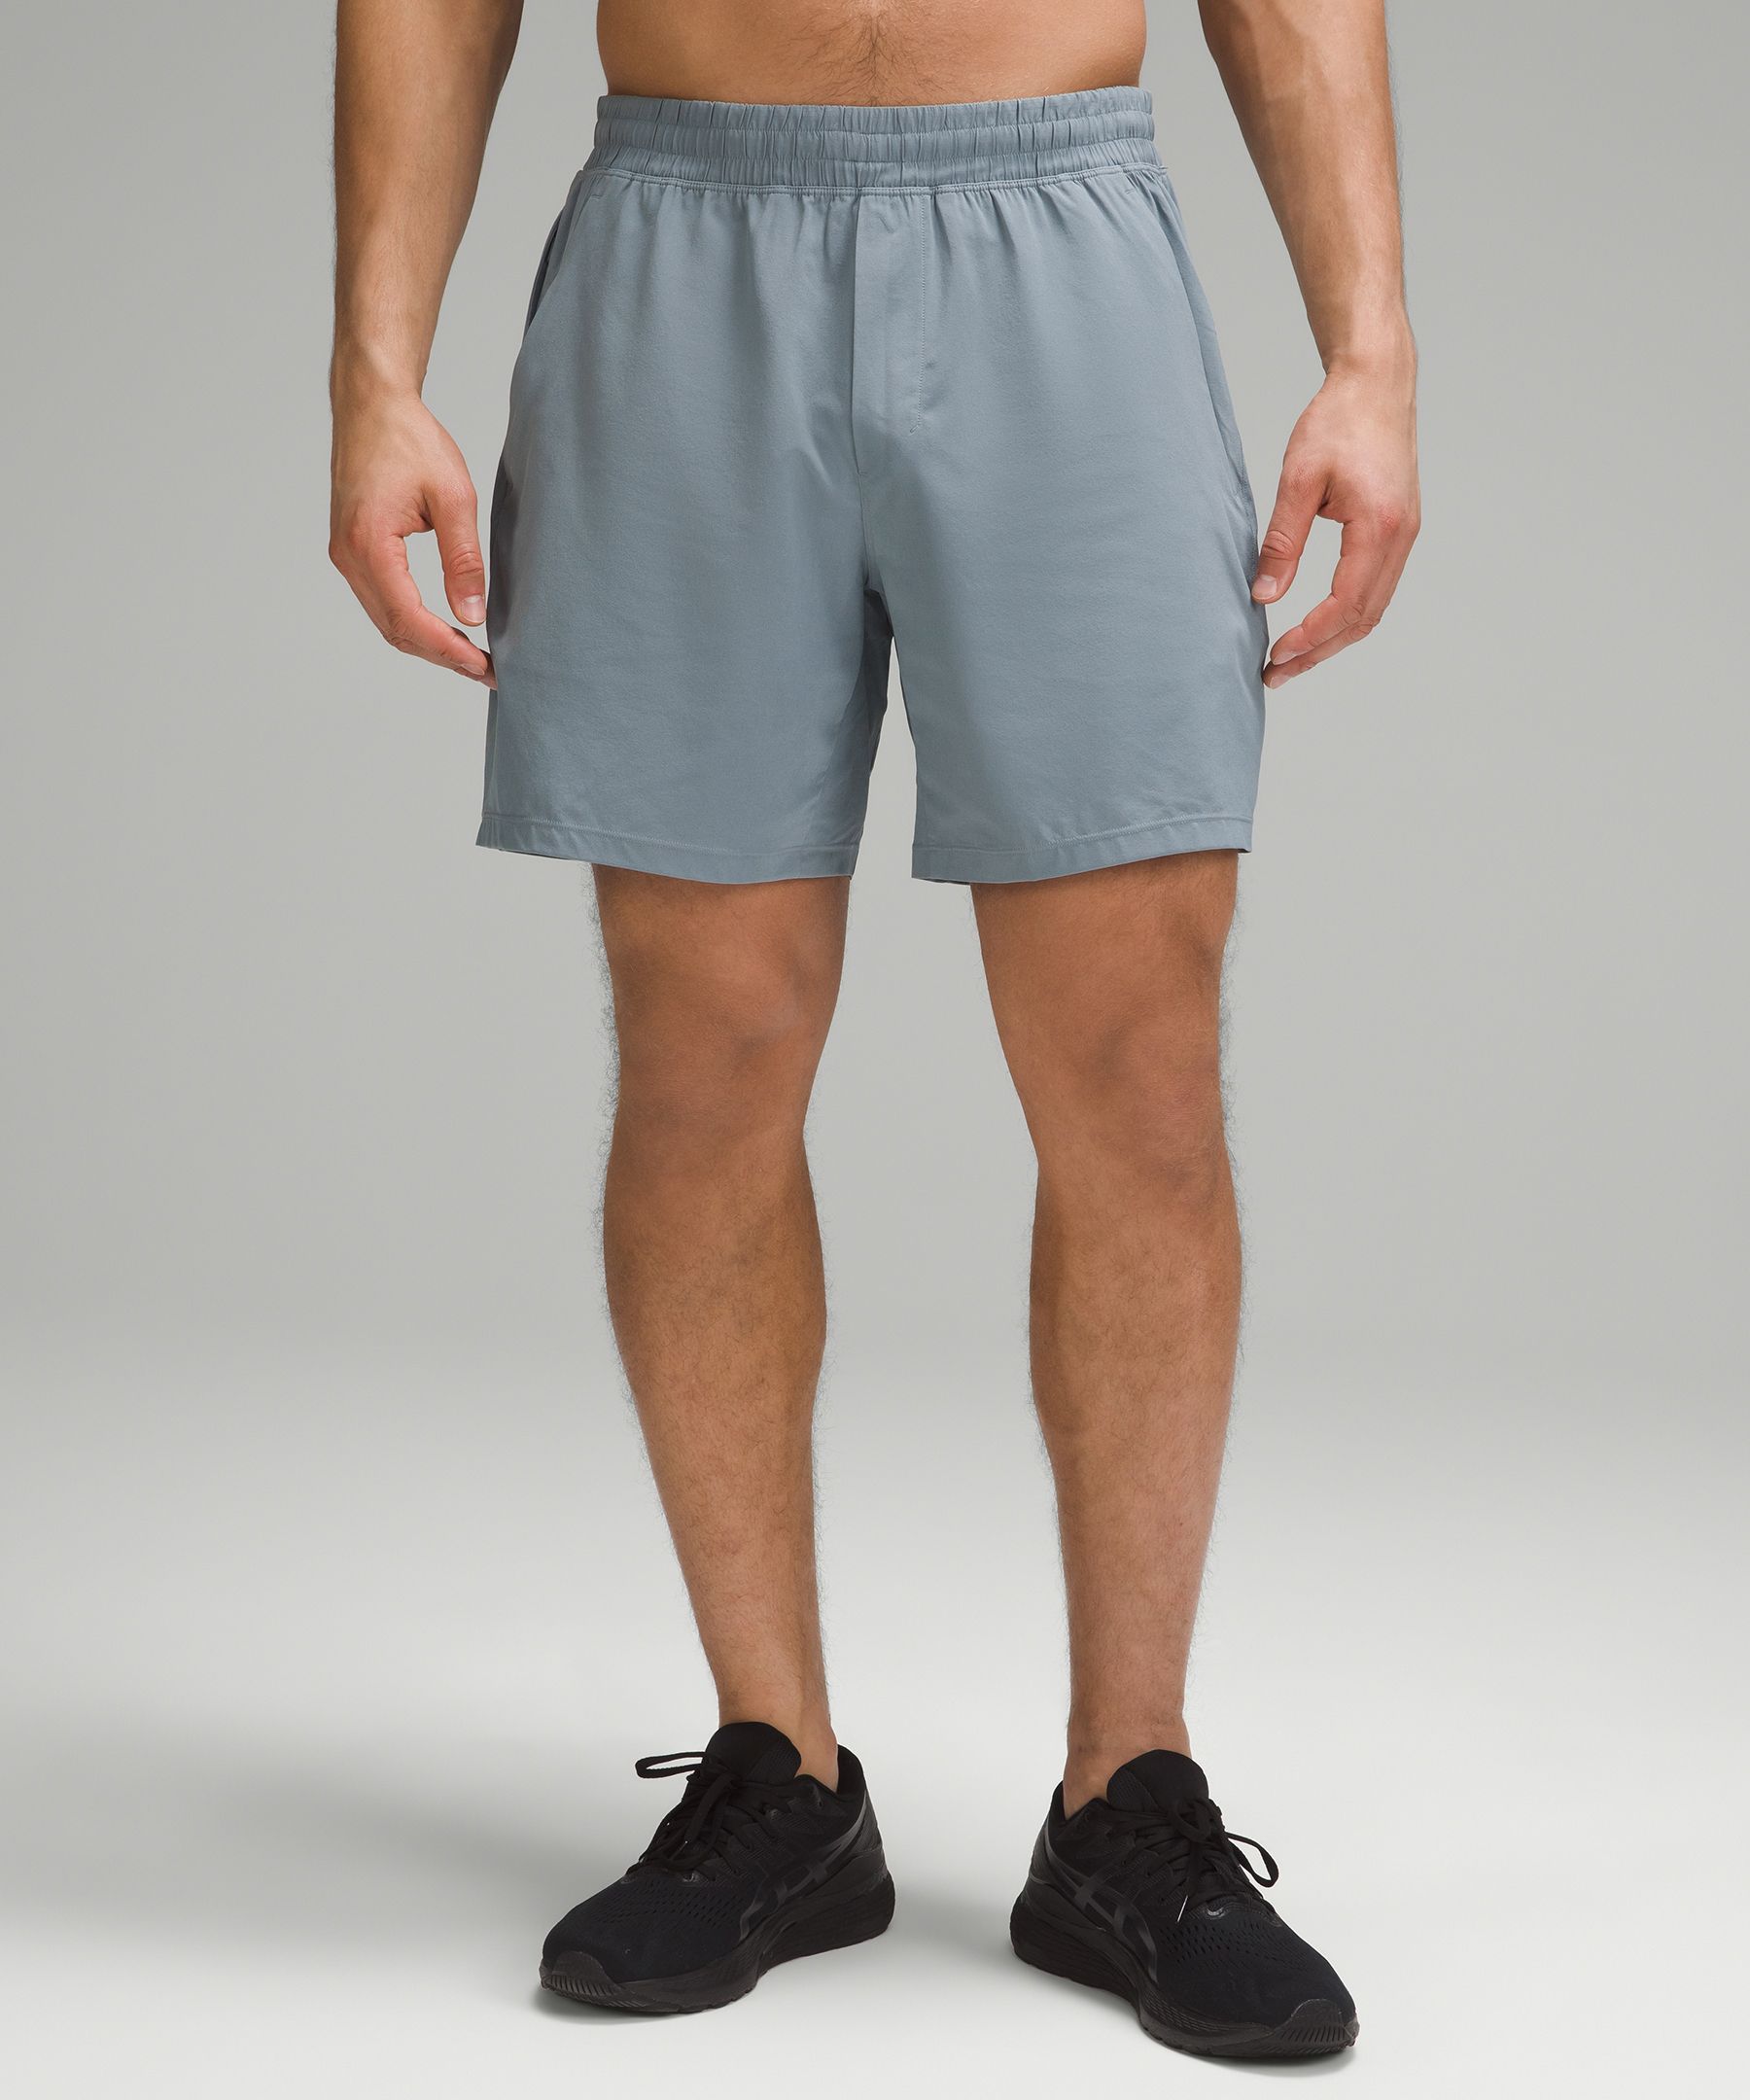 Compression Tucking Shorts – GB LLC